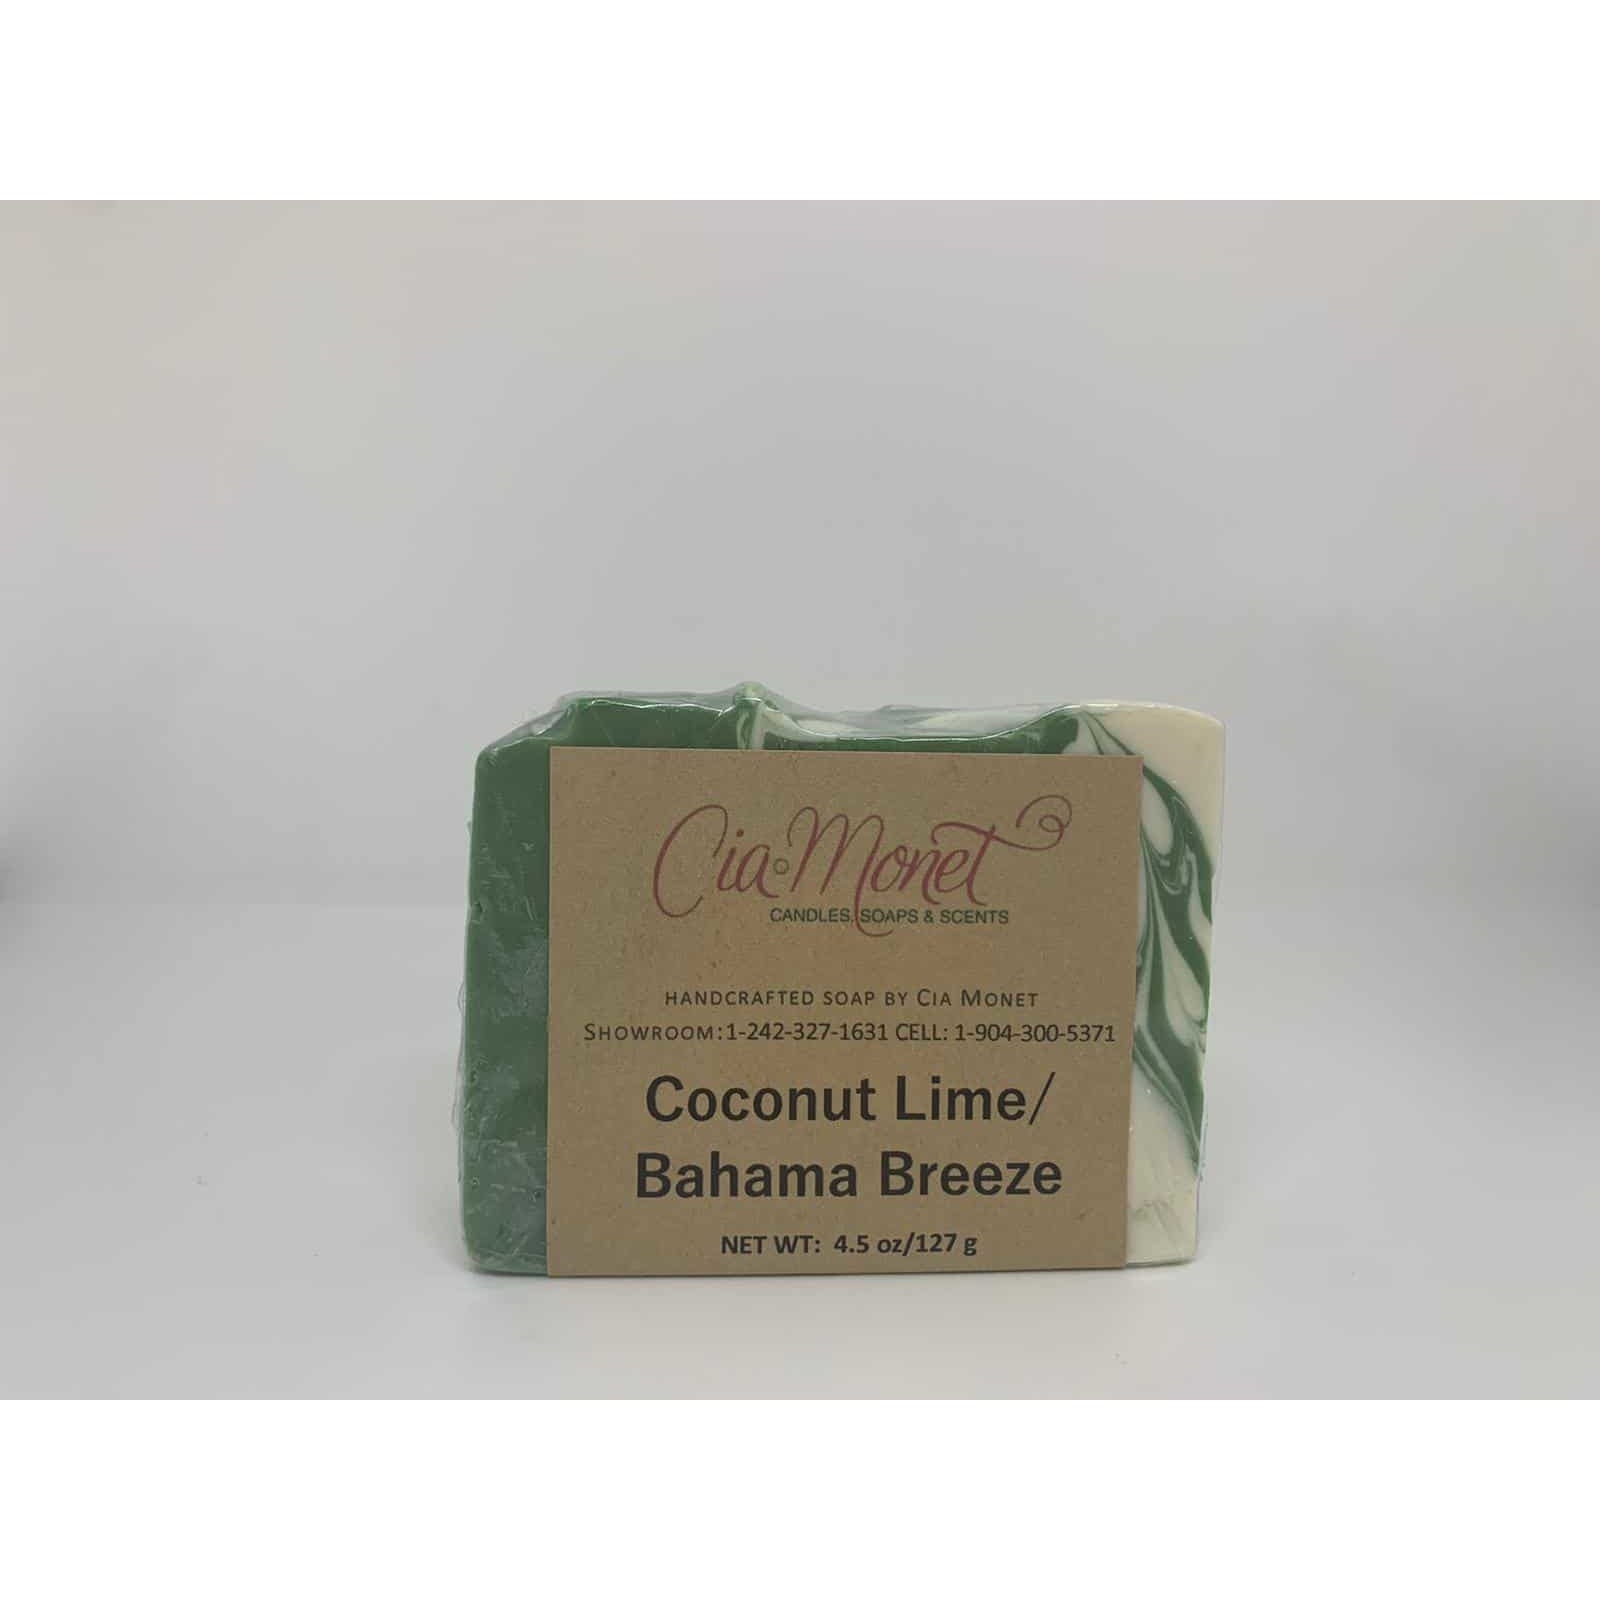 Cia Monet Coconut Lime/ Bahama Breeze Soap